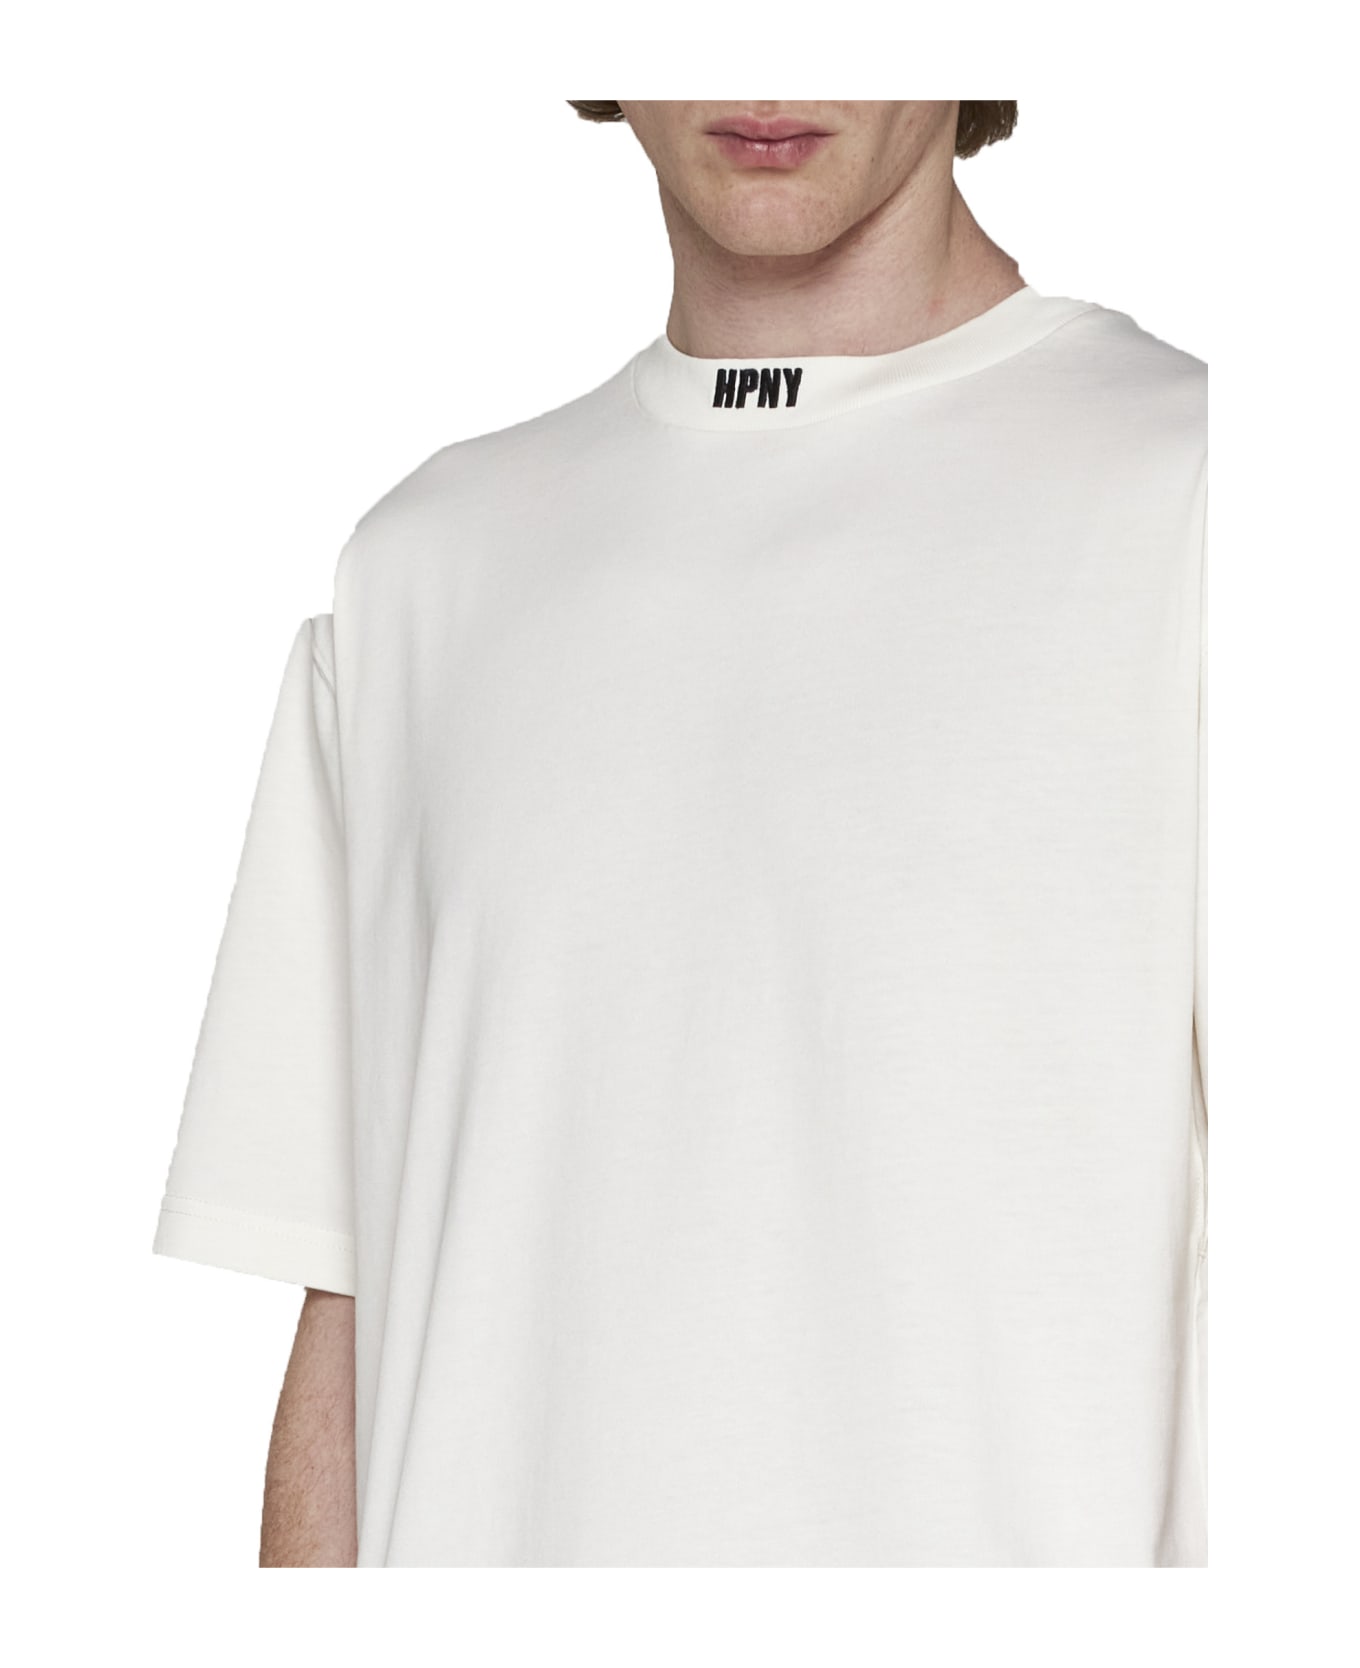 HERON PRESTON Hpny Embroidered T-shirt - White/black シャツ